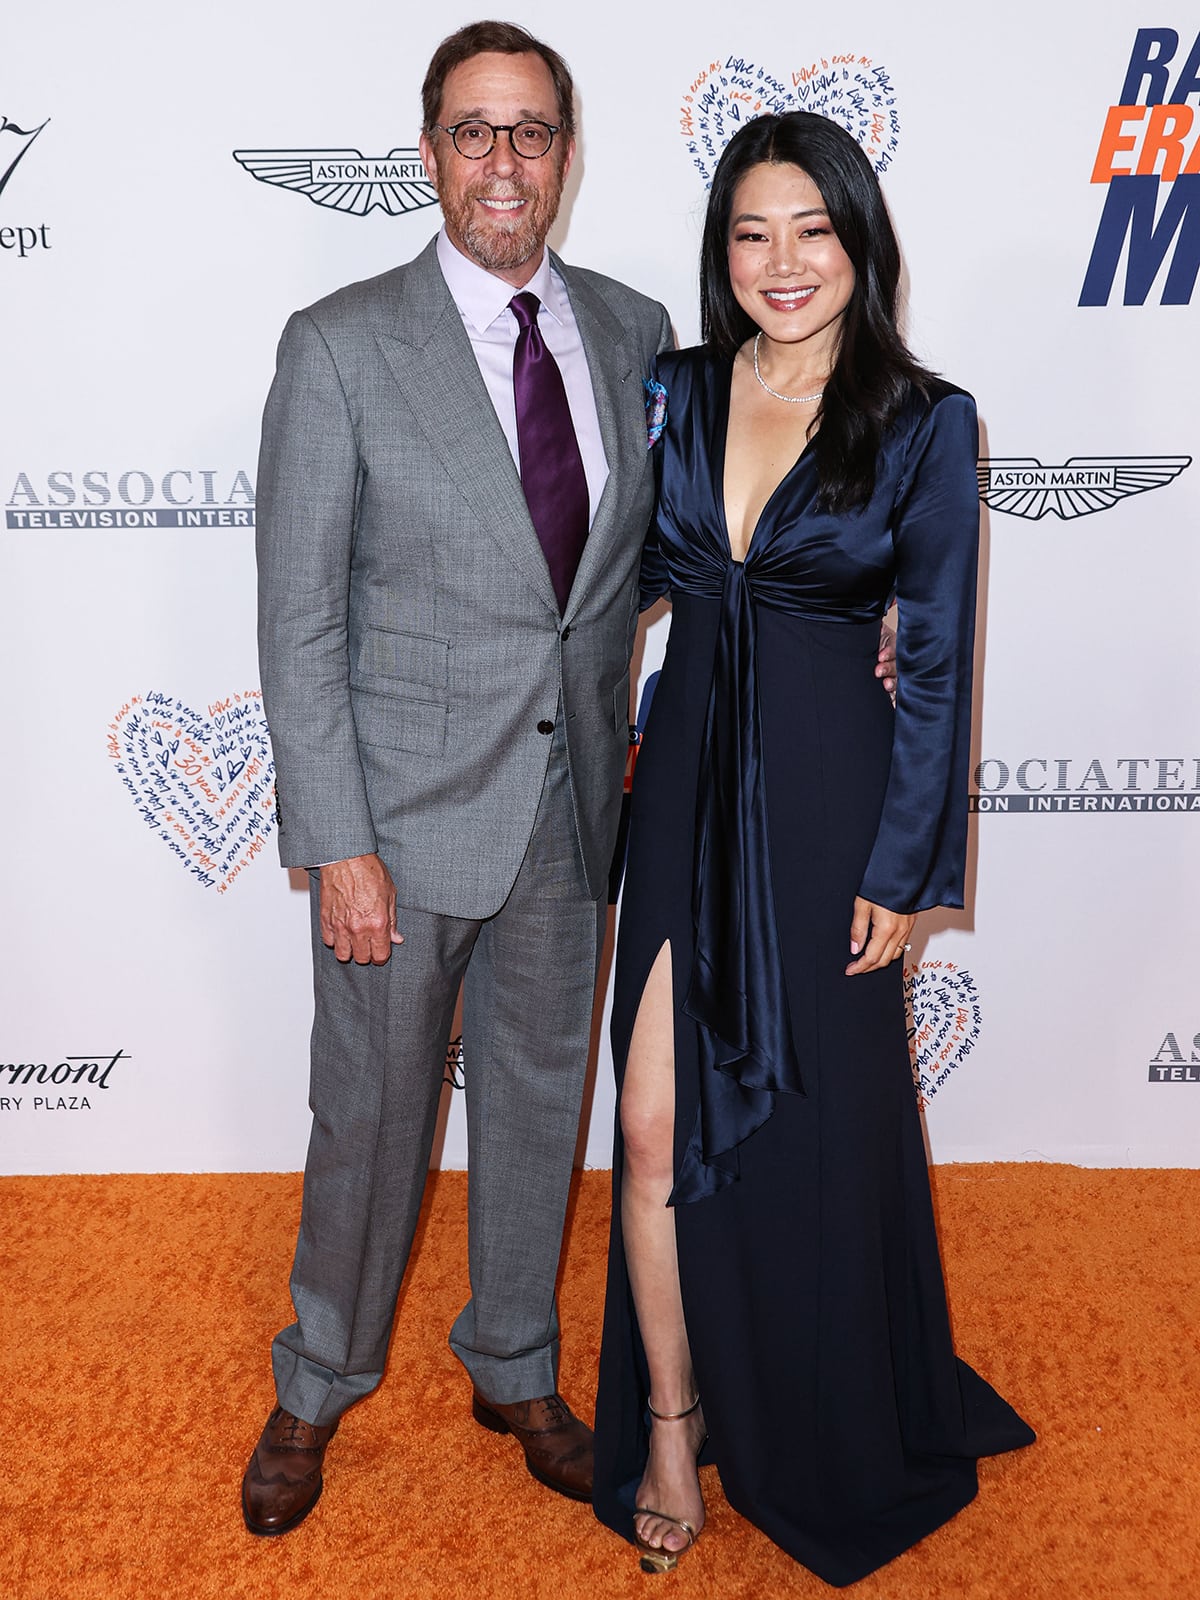 Crystal Kung Minkoff shares in her director husband Rob Minkoff's $30 million net worth